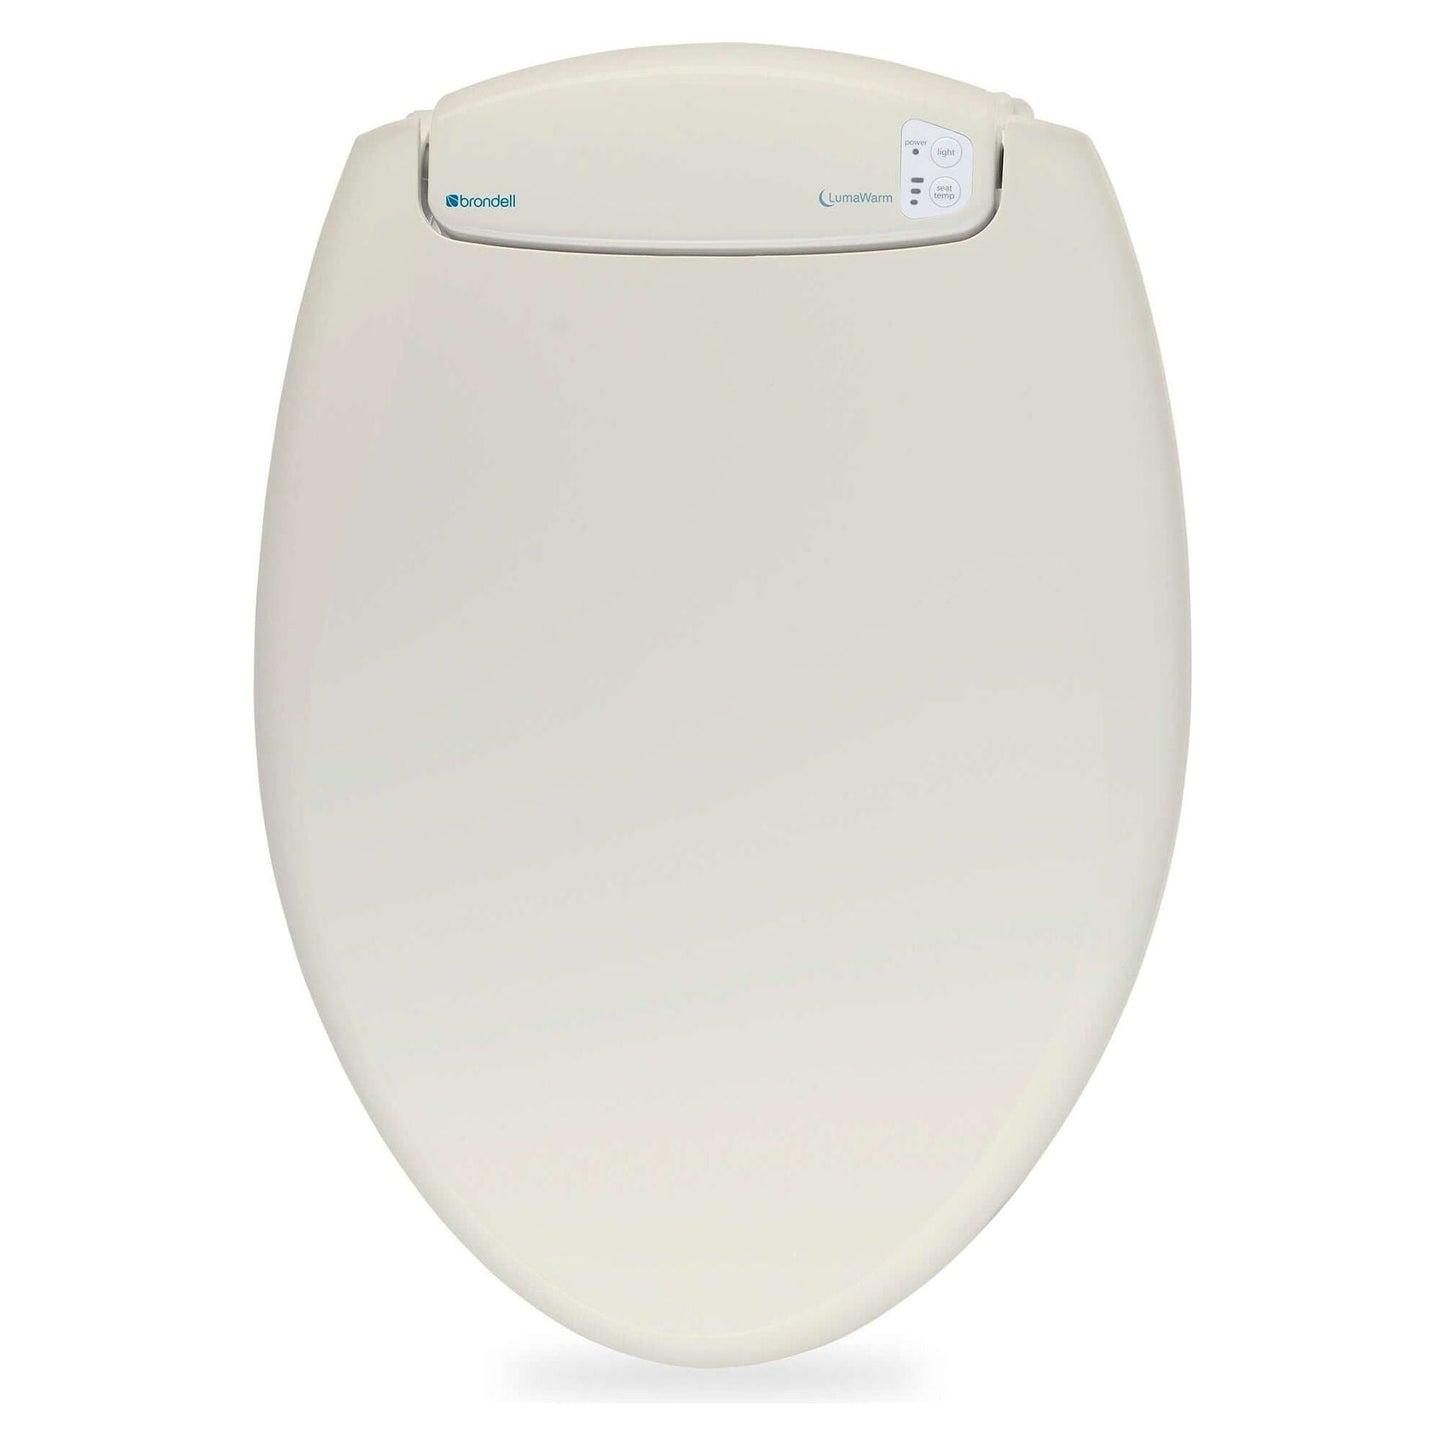 LumaWarm Heated Nightlight Toilet Seat - top view in beige color